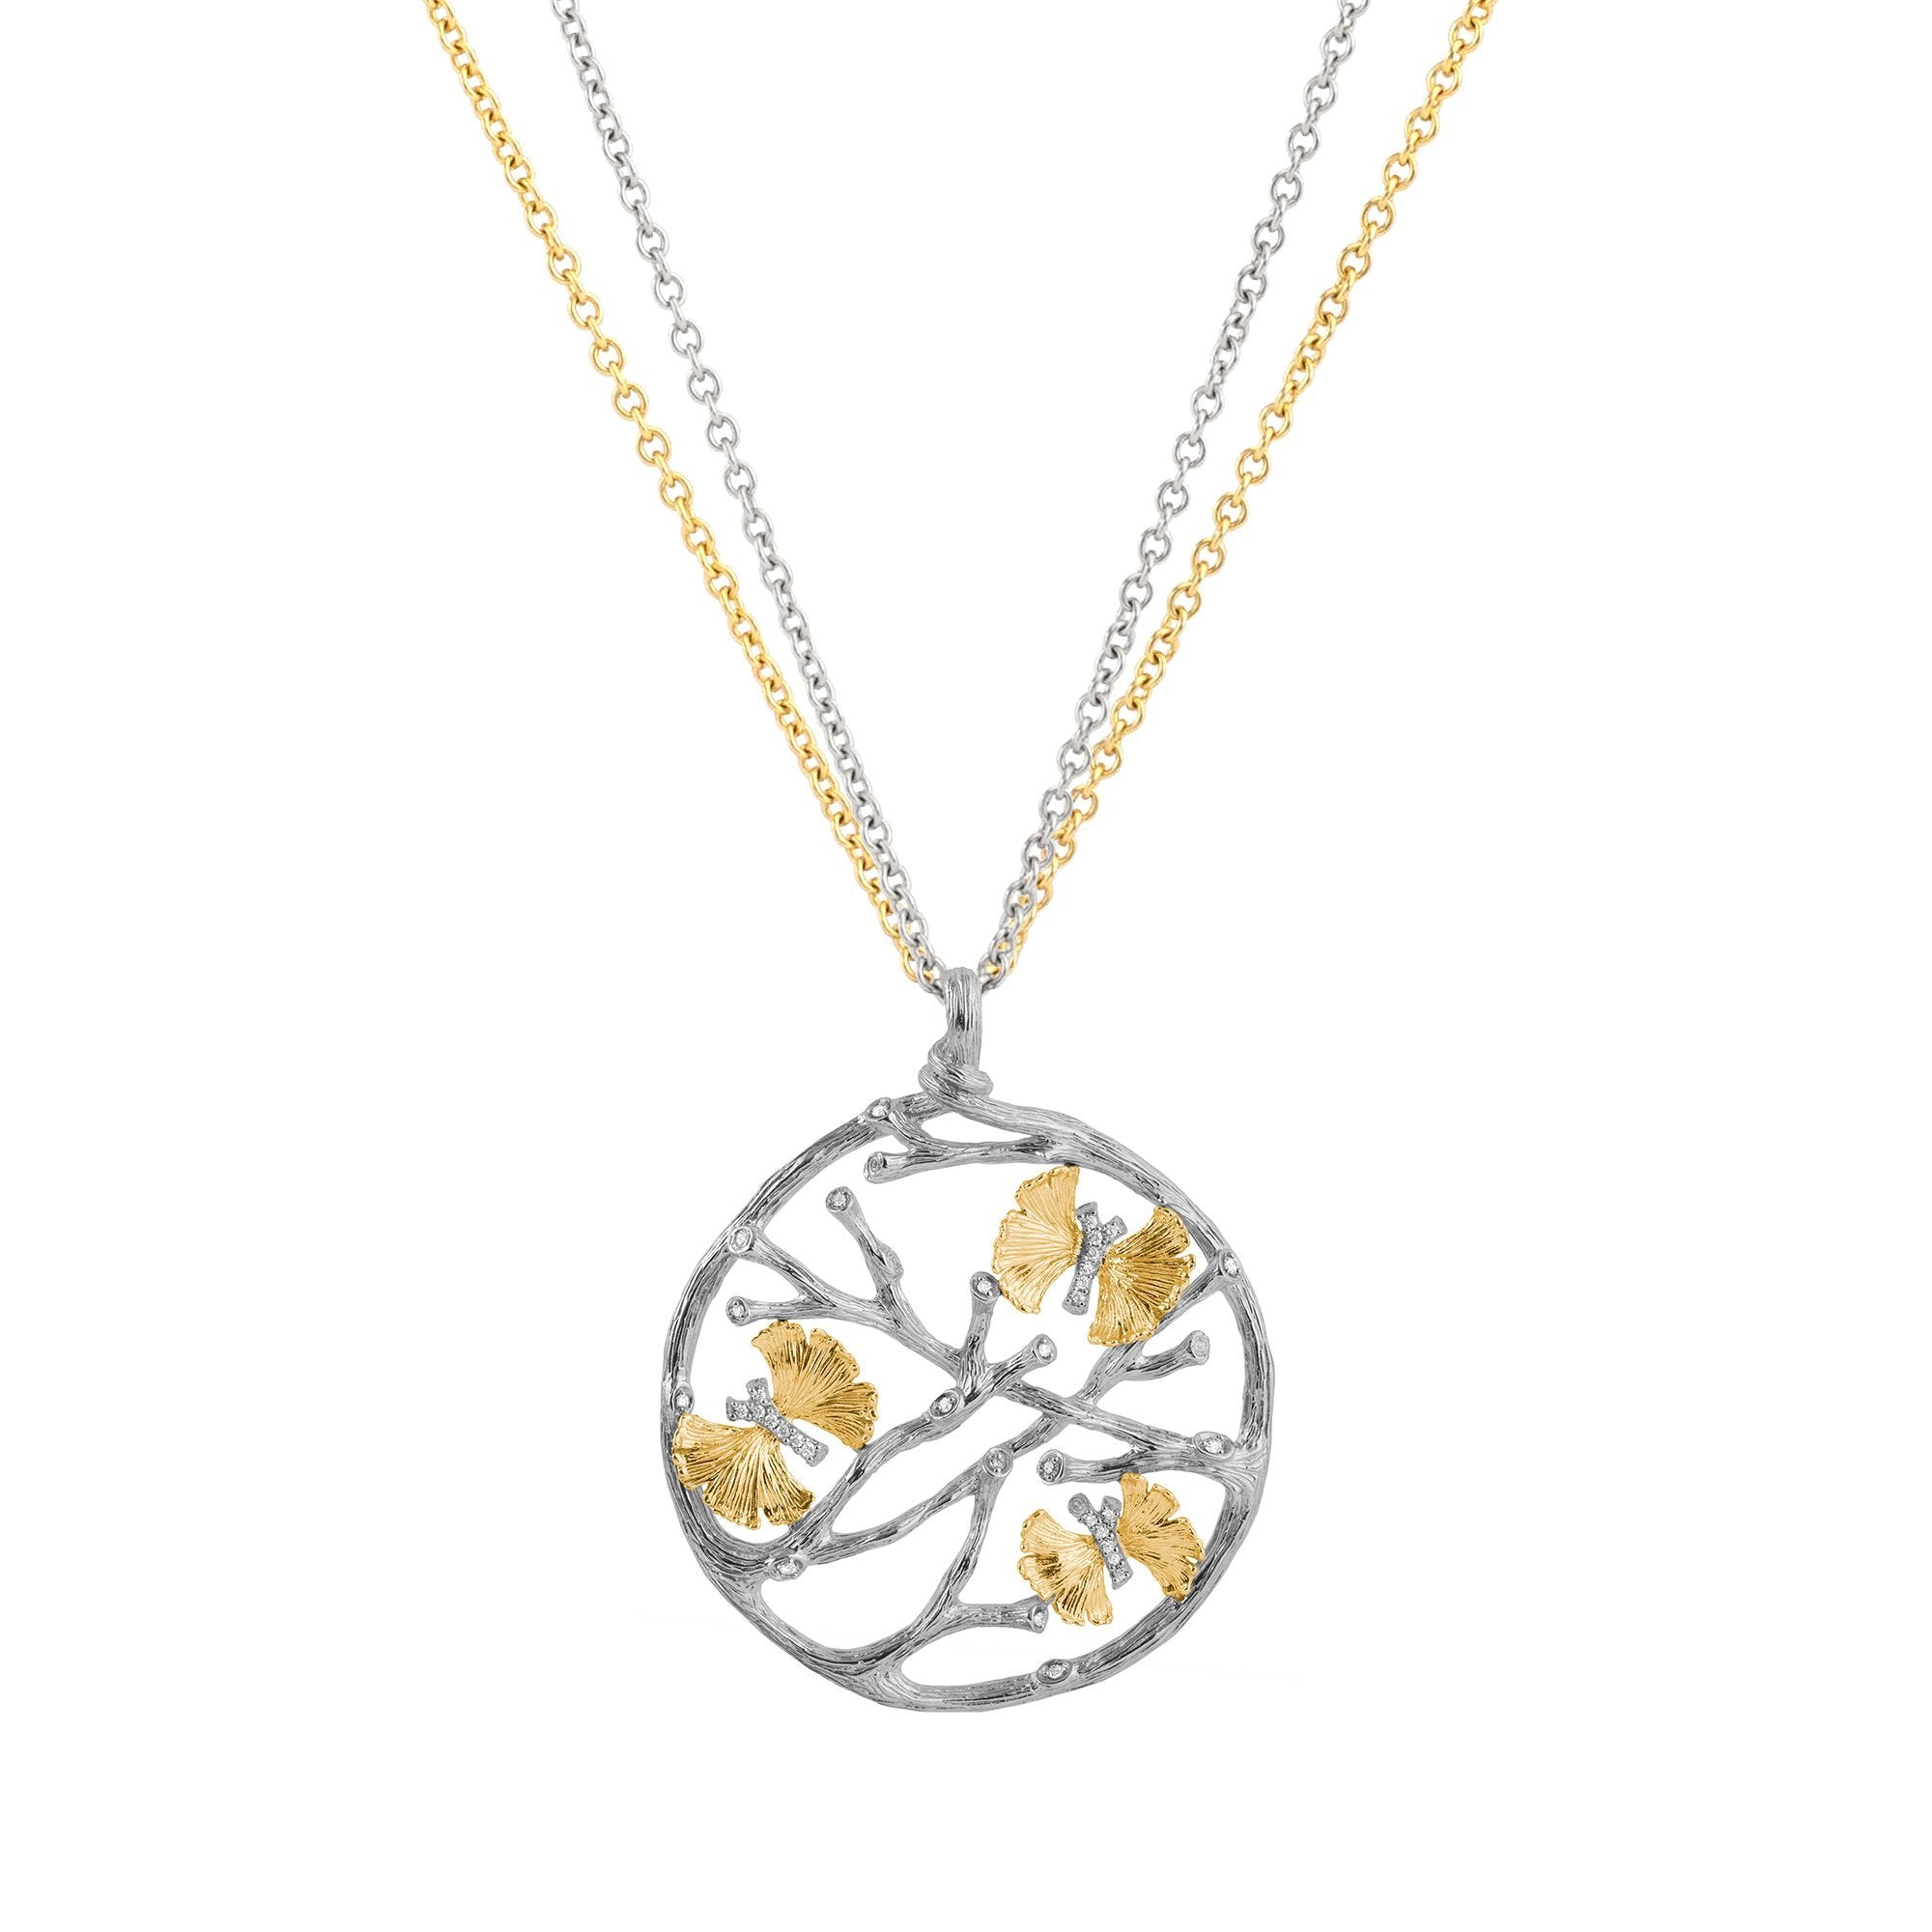 Michael Aram Butterfly Ginkgo Medallion Pendant Necklace with Diamonds